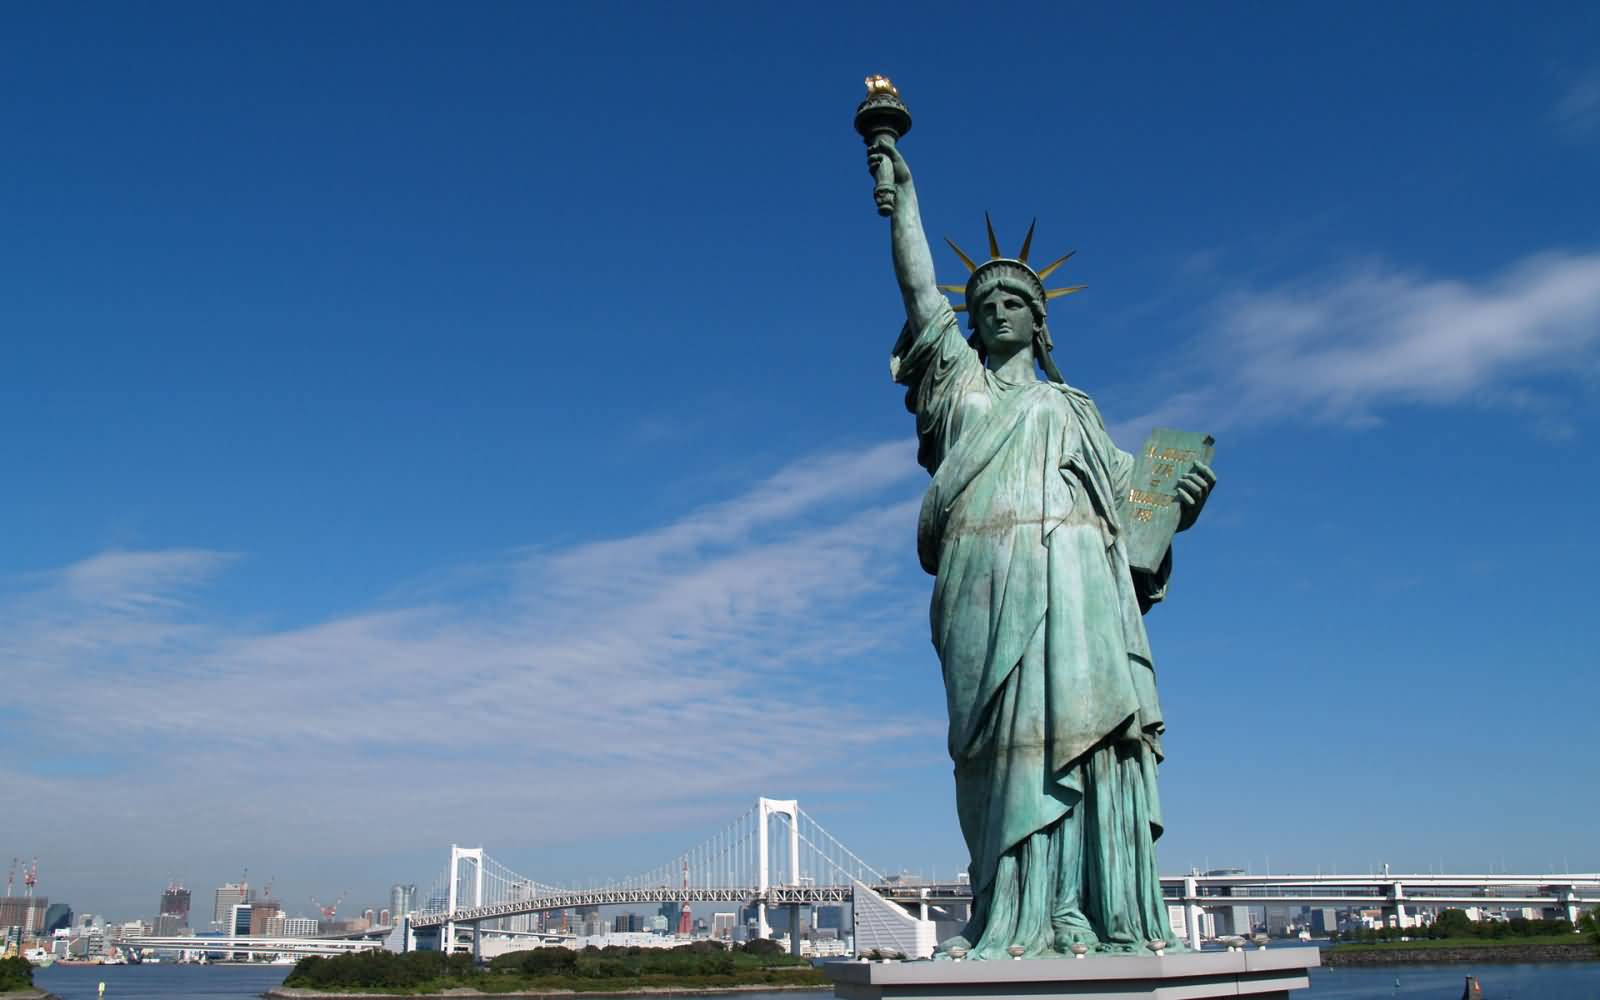 Statue Of Liberty And Brooklyn Bridge View